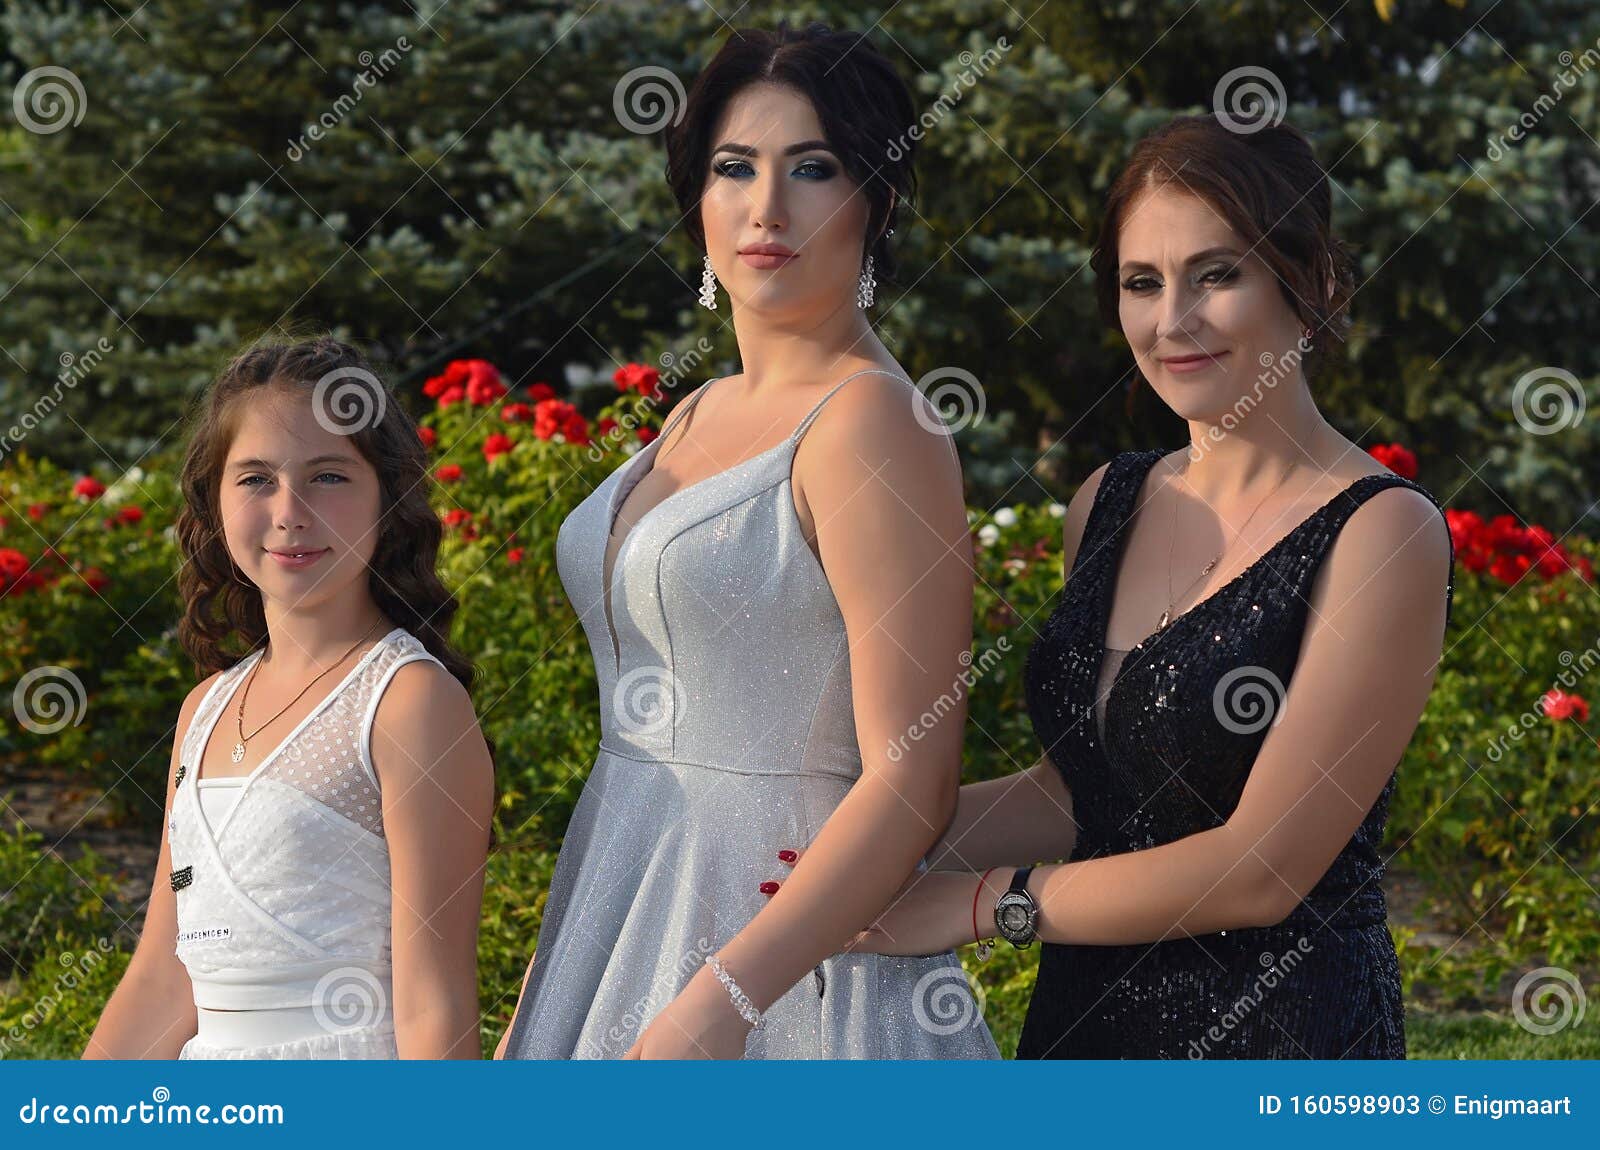 Zoutnet | News | Lucky girls stand a chance to win matric farewell dresses